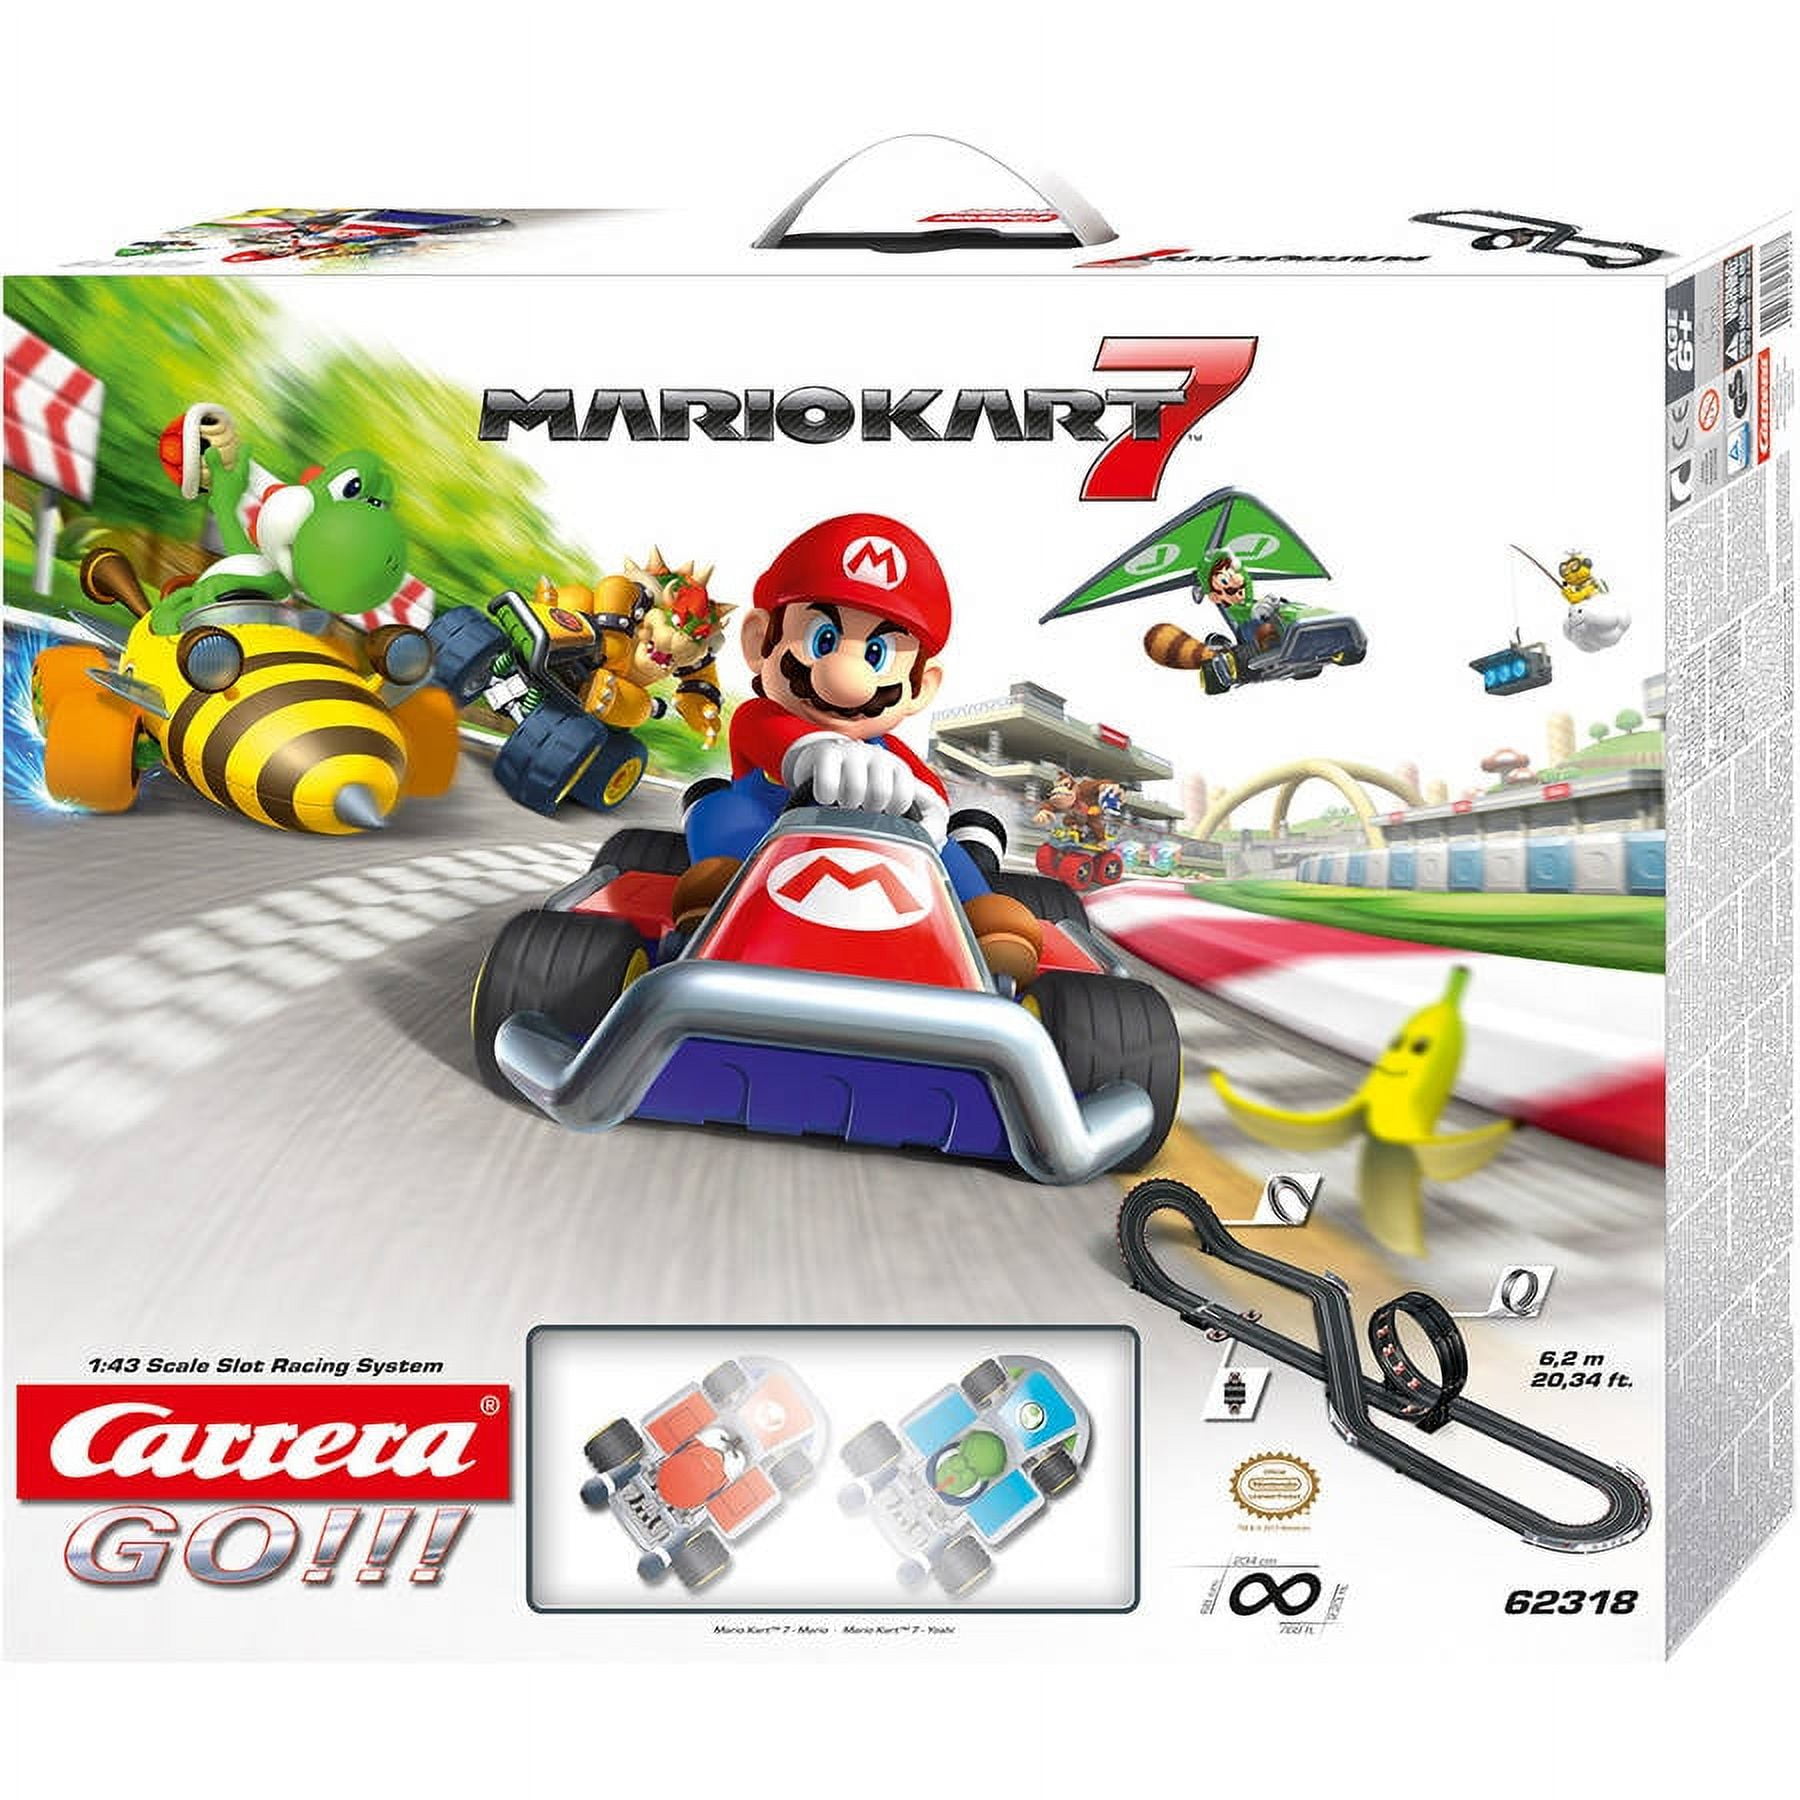 Carrera Mario Kart 7 Racing Set